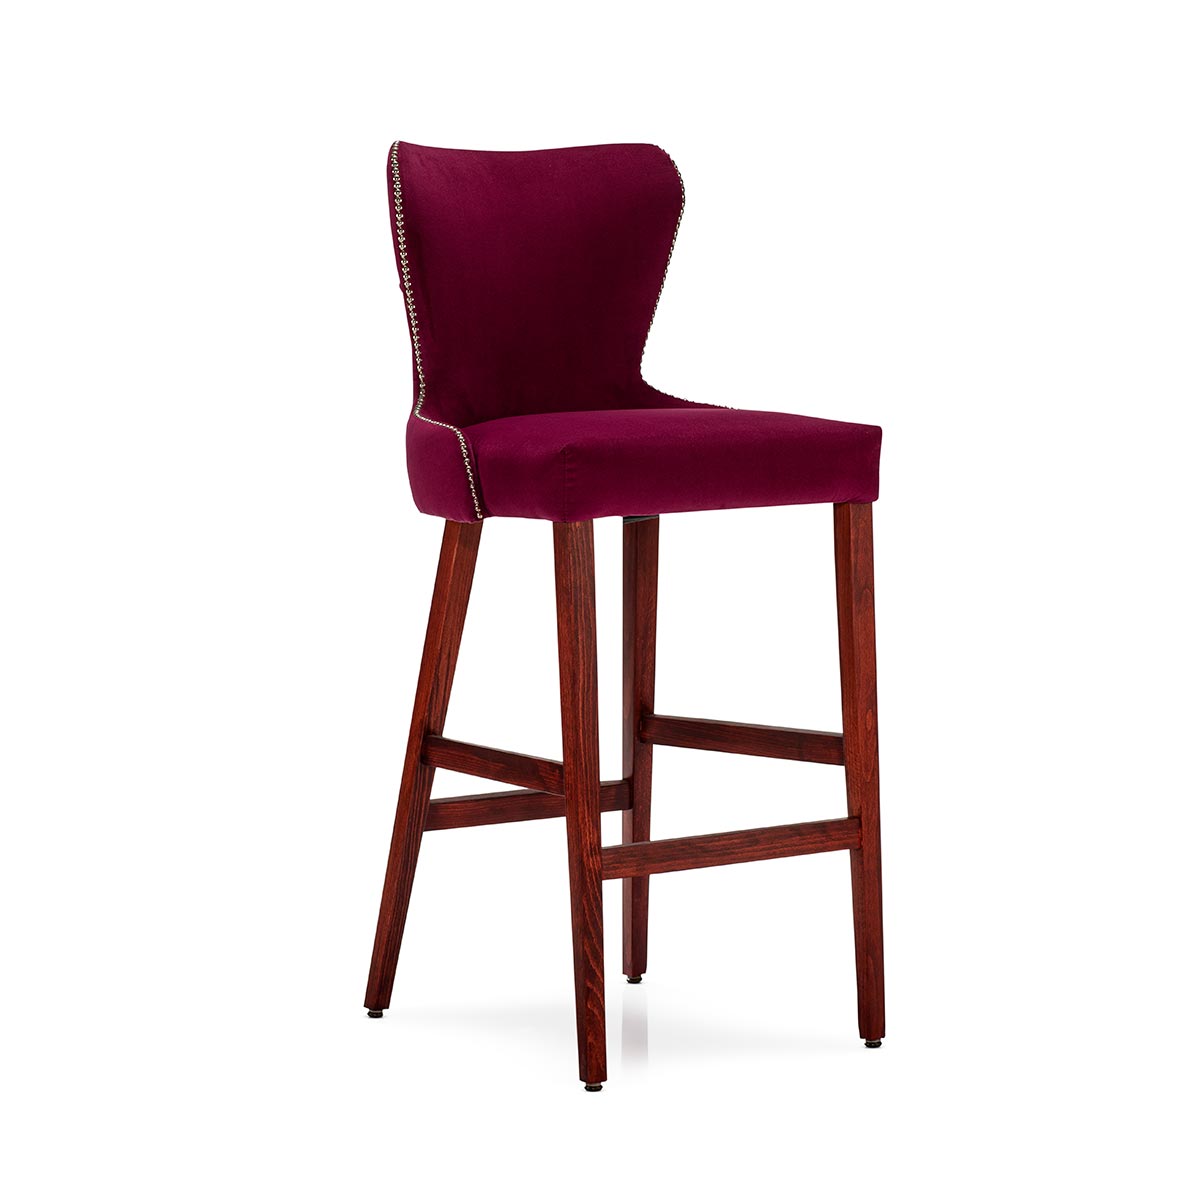 Urban Chair Bar Featured - Barske stolice Detal